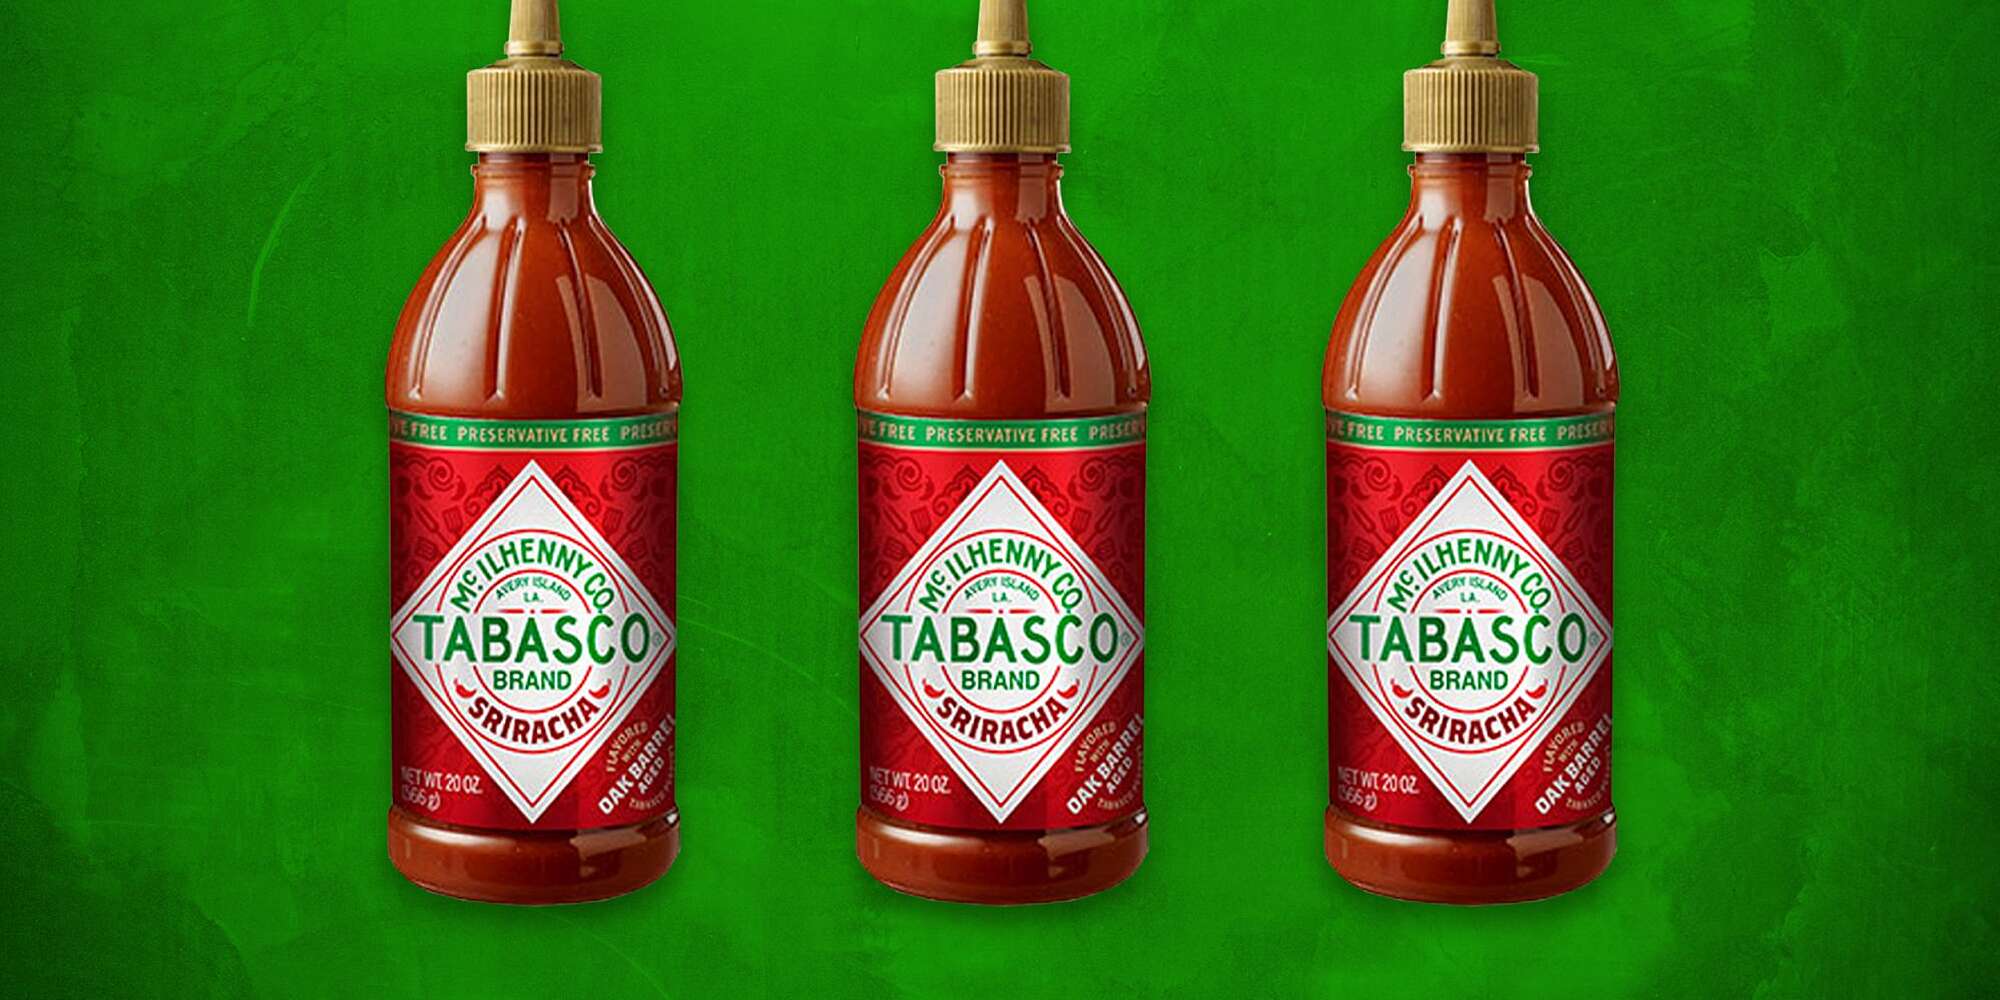 Tabasco Sriracha Is A Surprise Entry For Best Sriracha Myrecipes